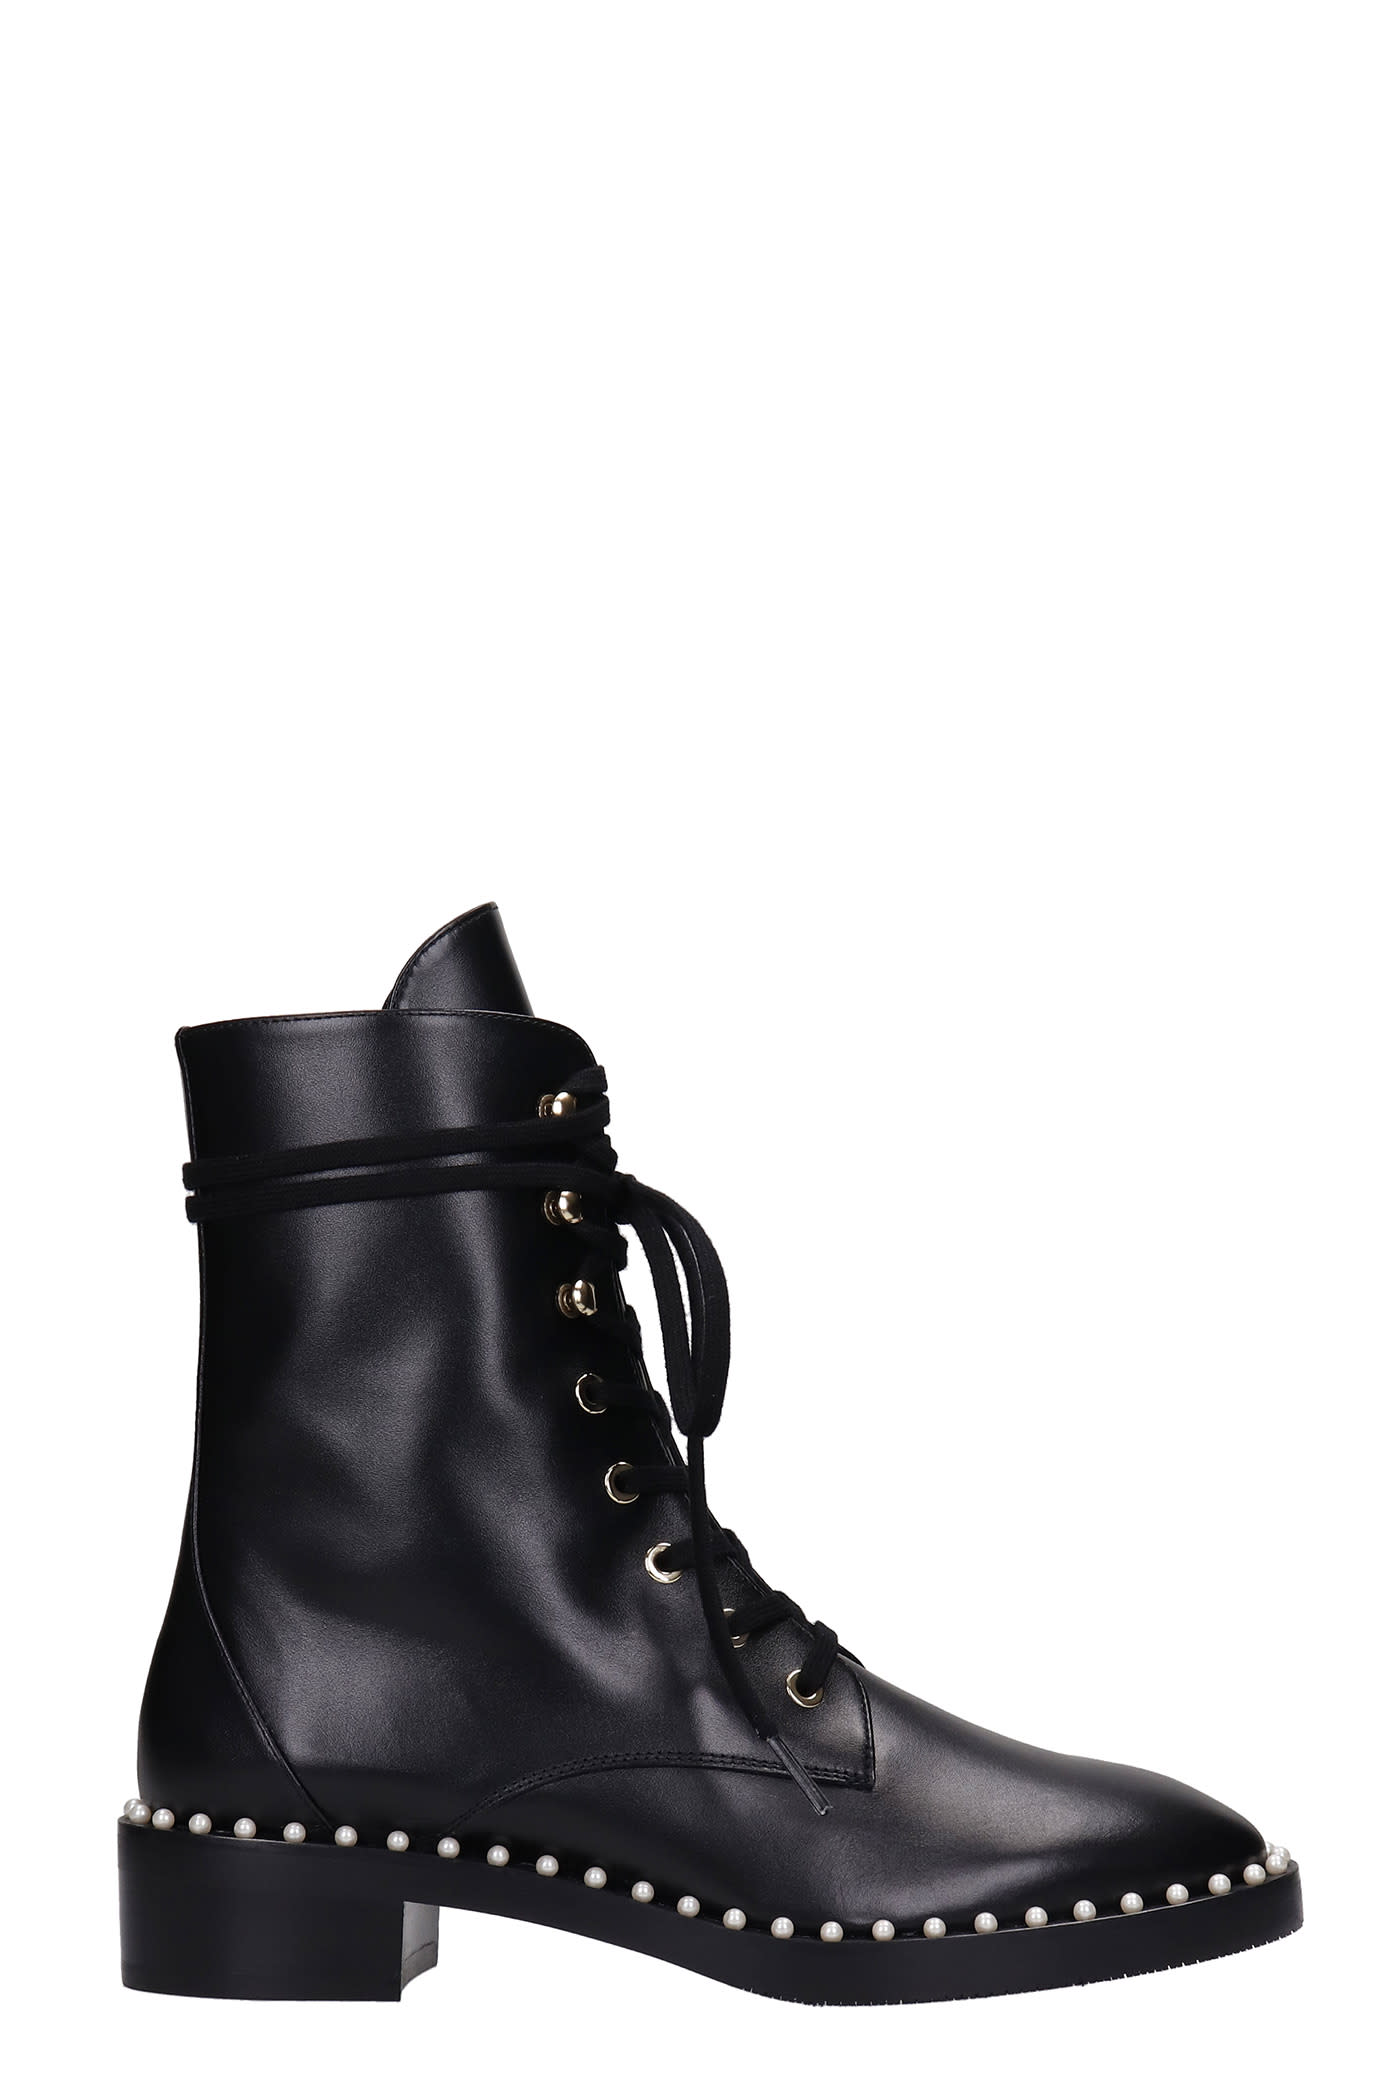 Stuart Weitzman Sondra Low Heels Boots In Black Leather